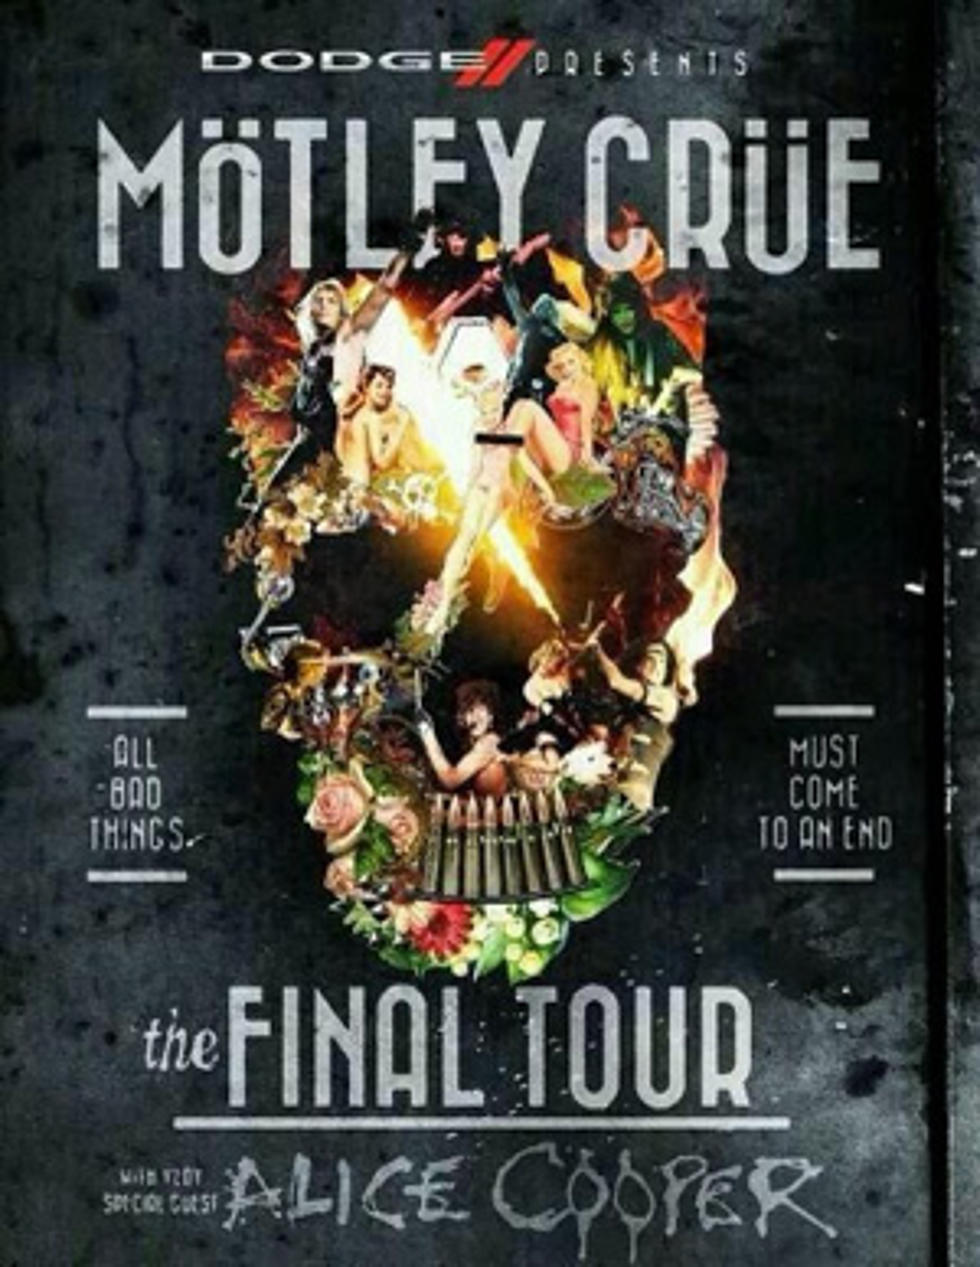 Motley Crue Add 2 Texas Dates Dates to Final Tour